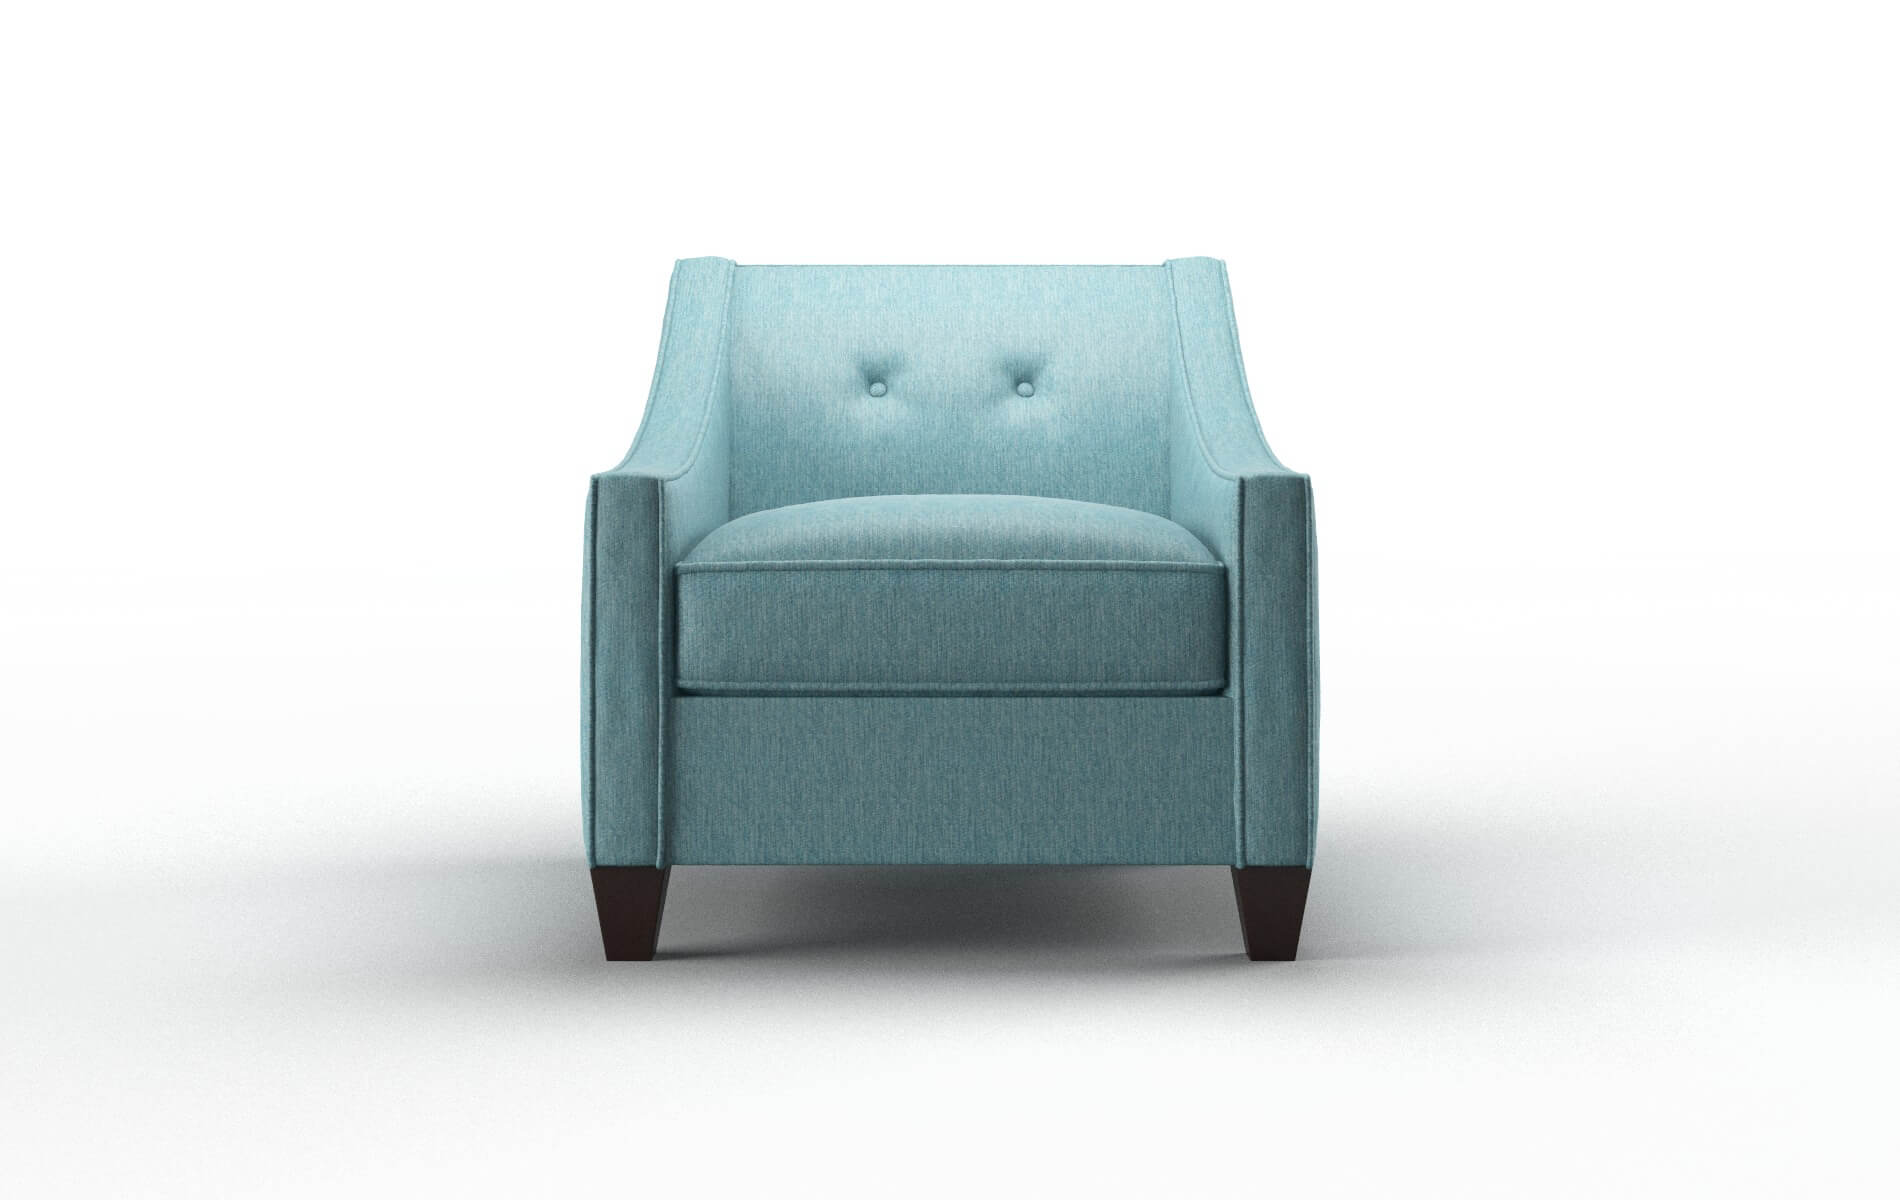 Berlin Cosmo Turquoise Chair espresso legs 1